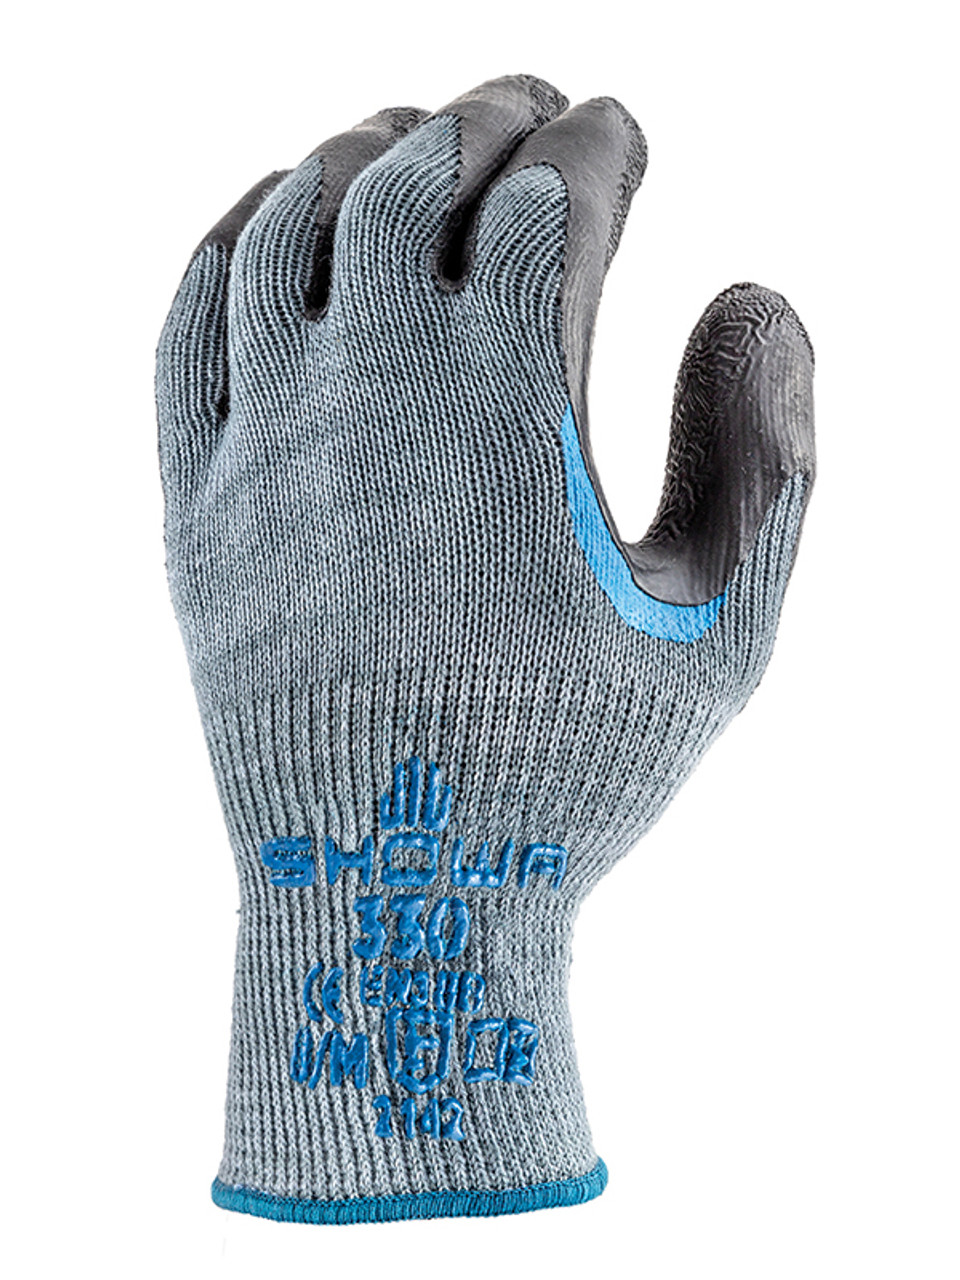 SHOWA® ATLAS® 330 Palm Coating Natural Rubber Glove